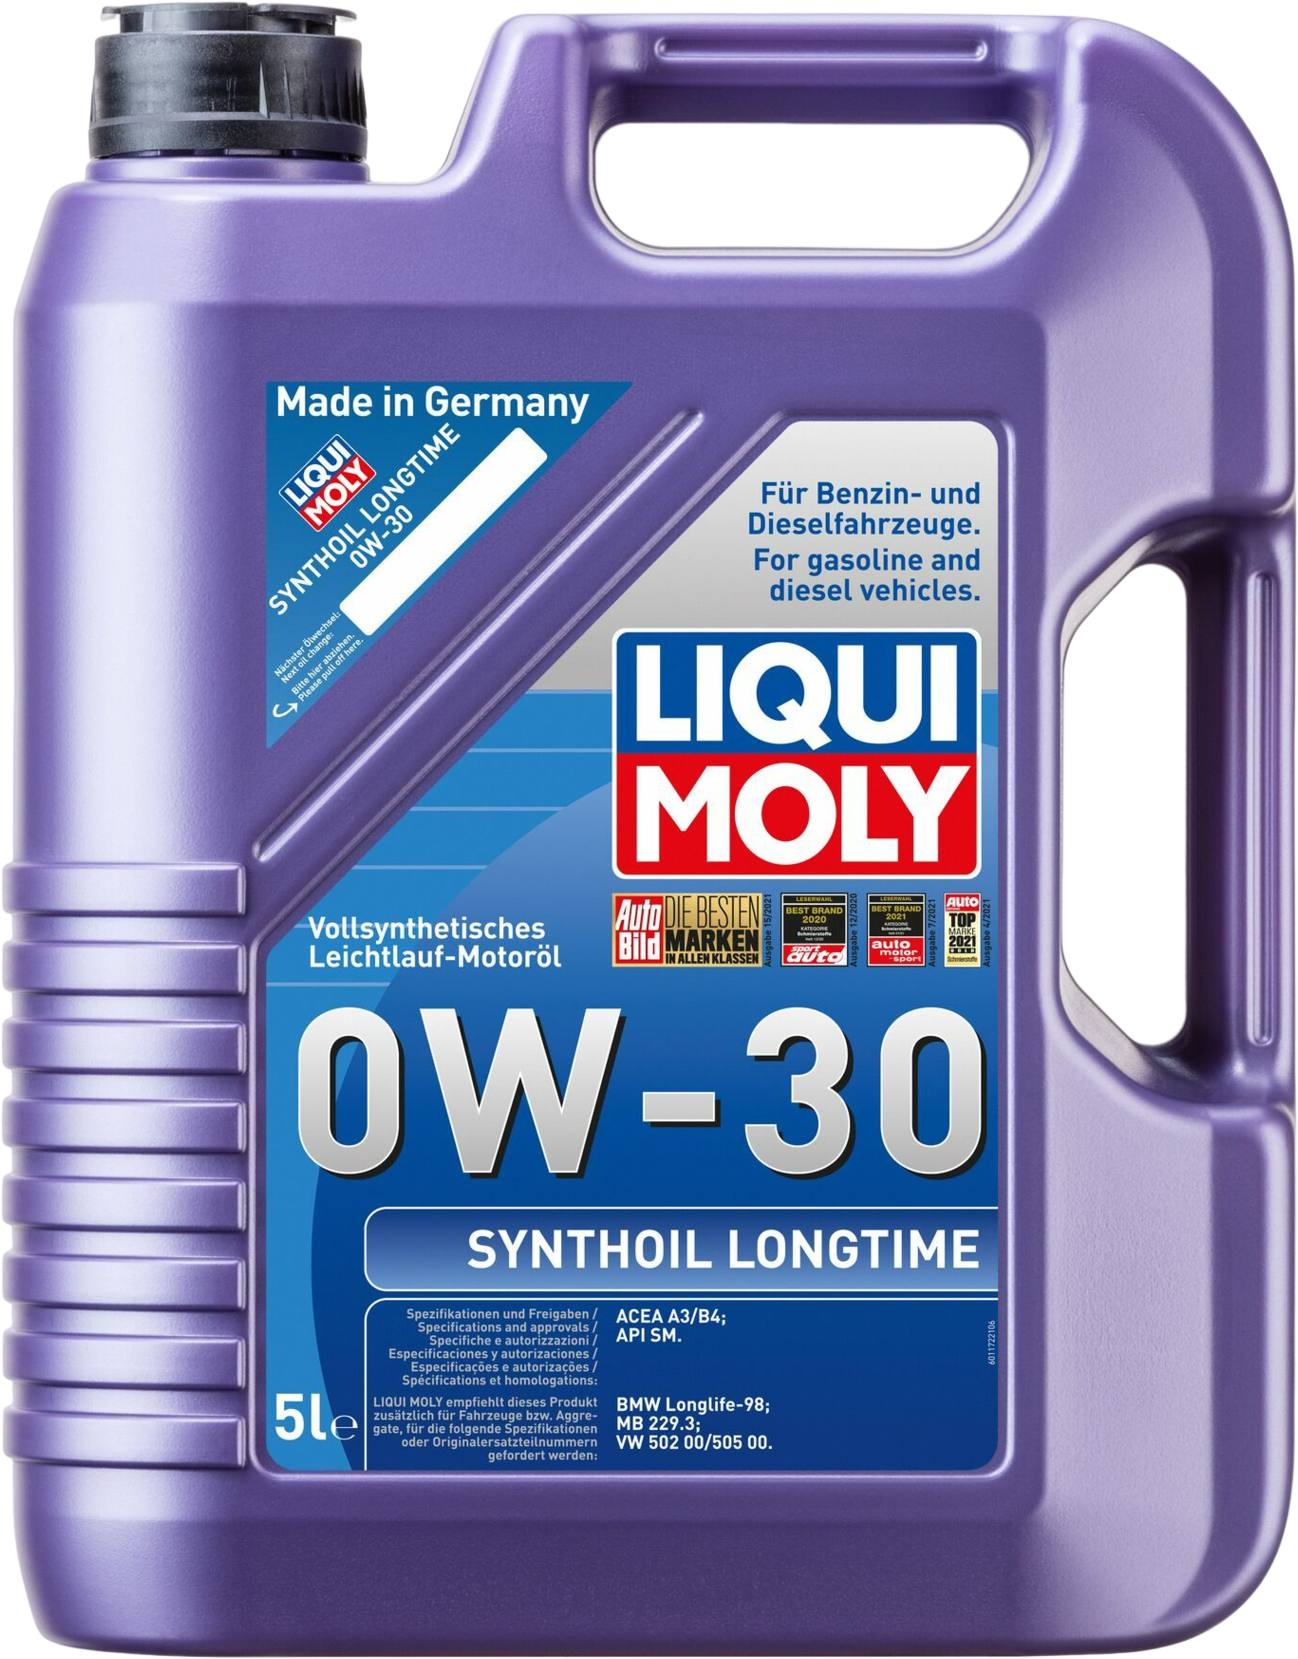 Liqui Moly Synthoil Longtime 0W-30, 5 lt